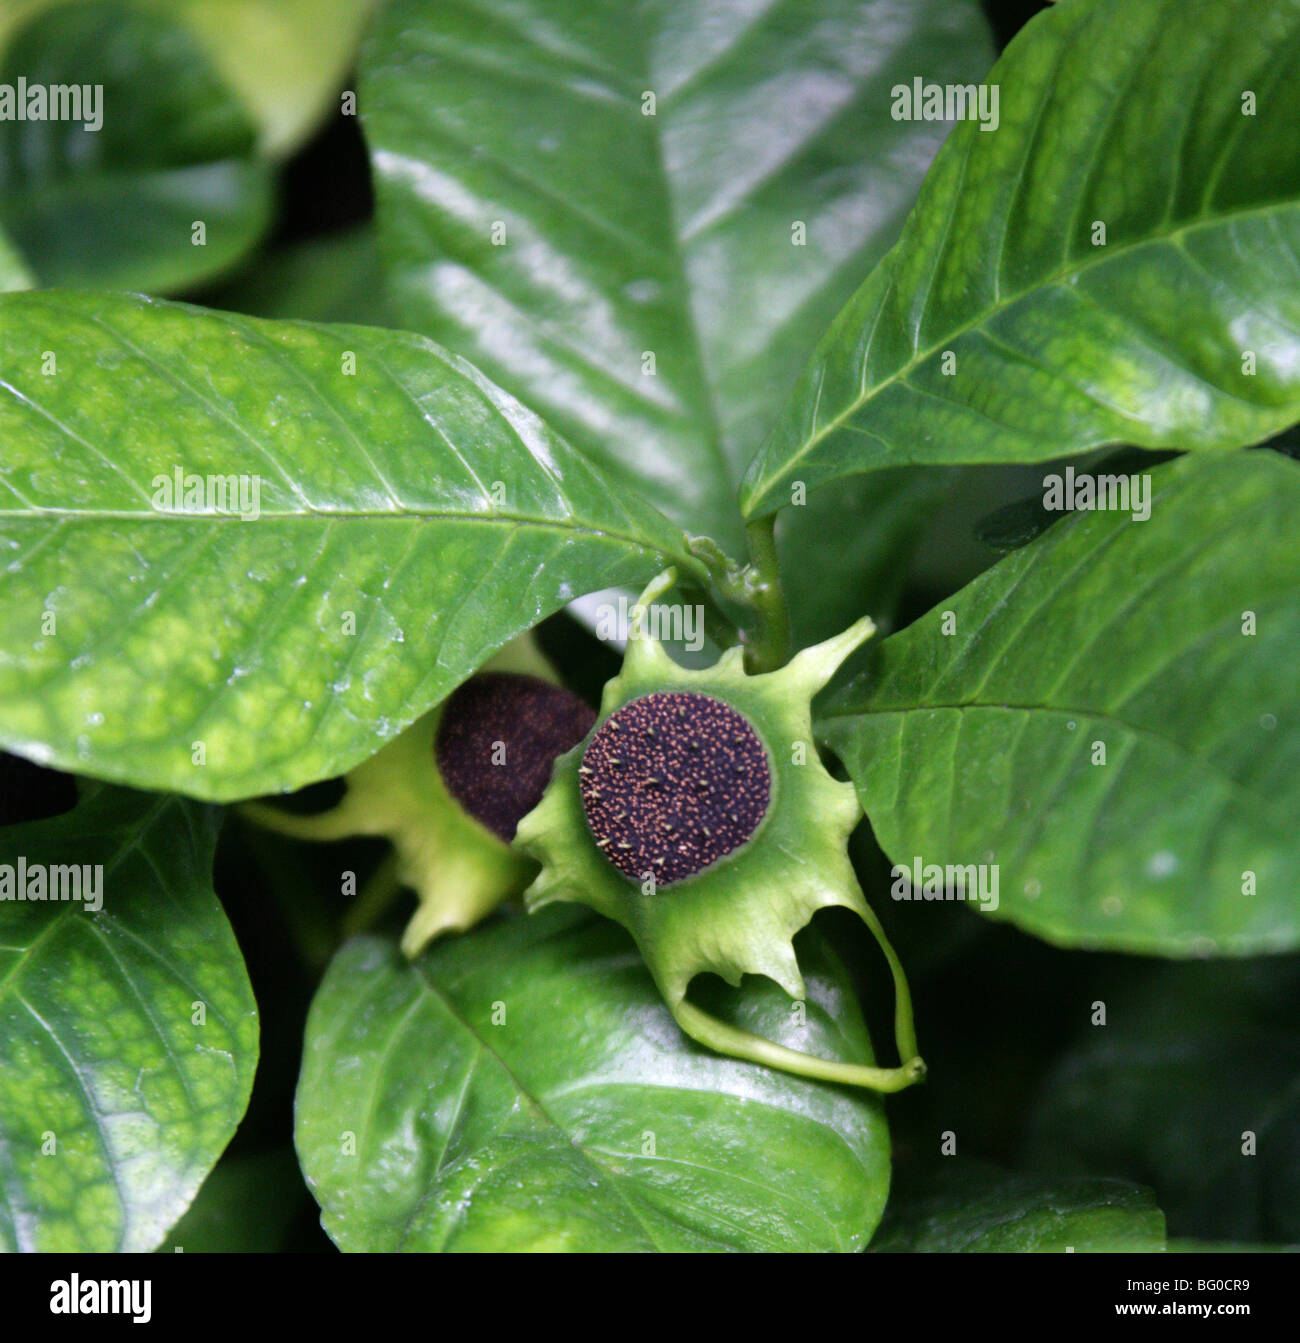 Dorstenia barteri var. multiradiata, Moraceae, West Africa Stock Photo